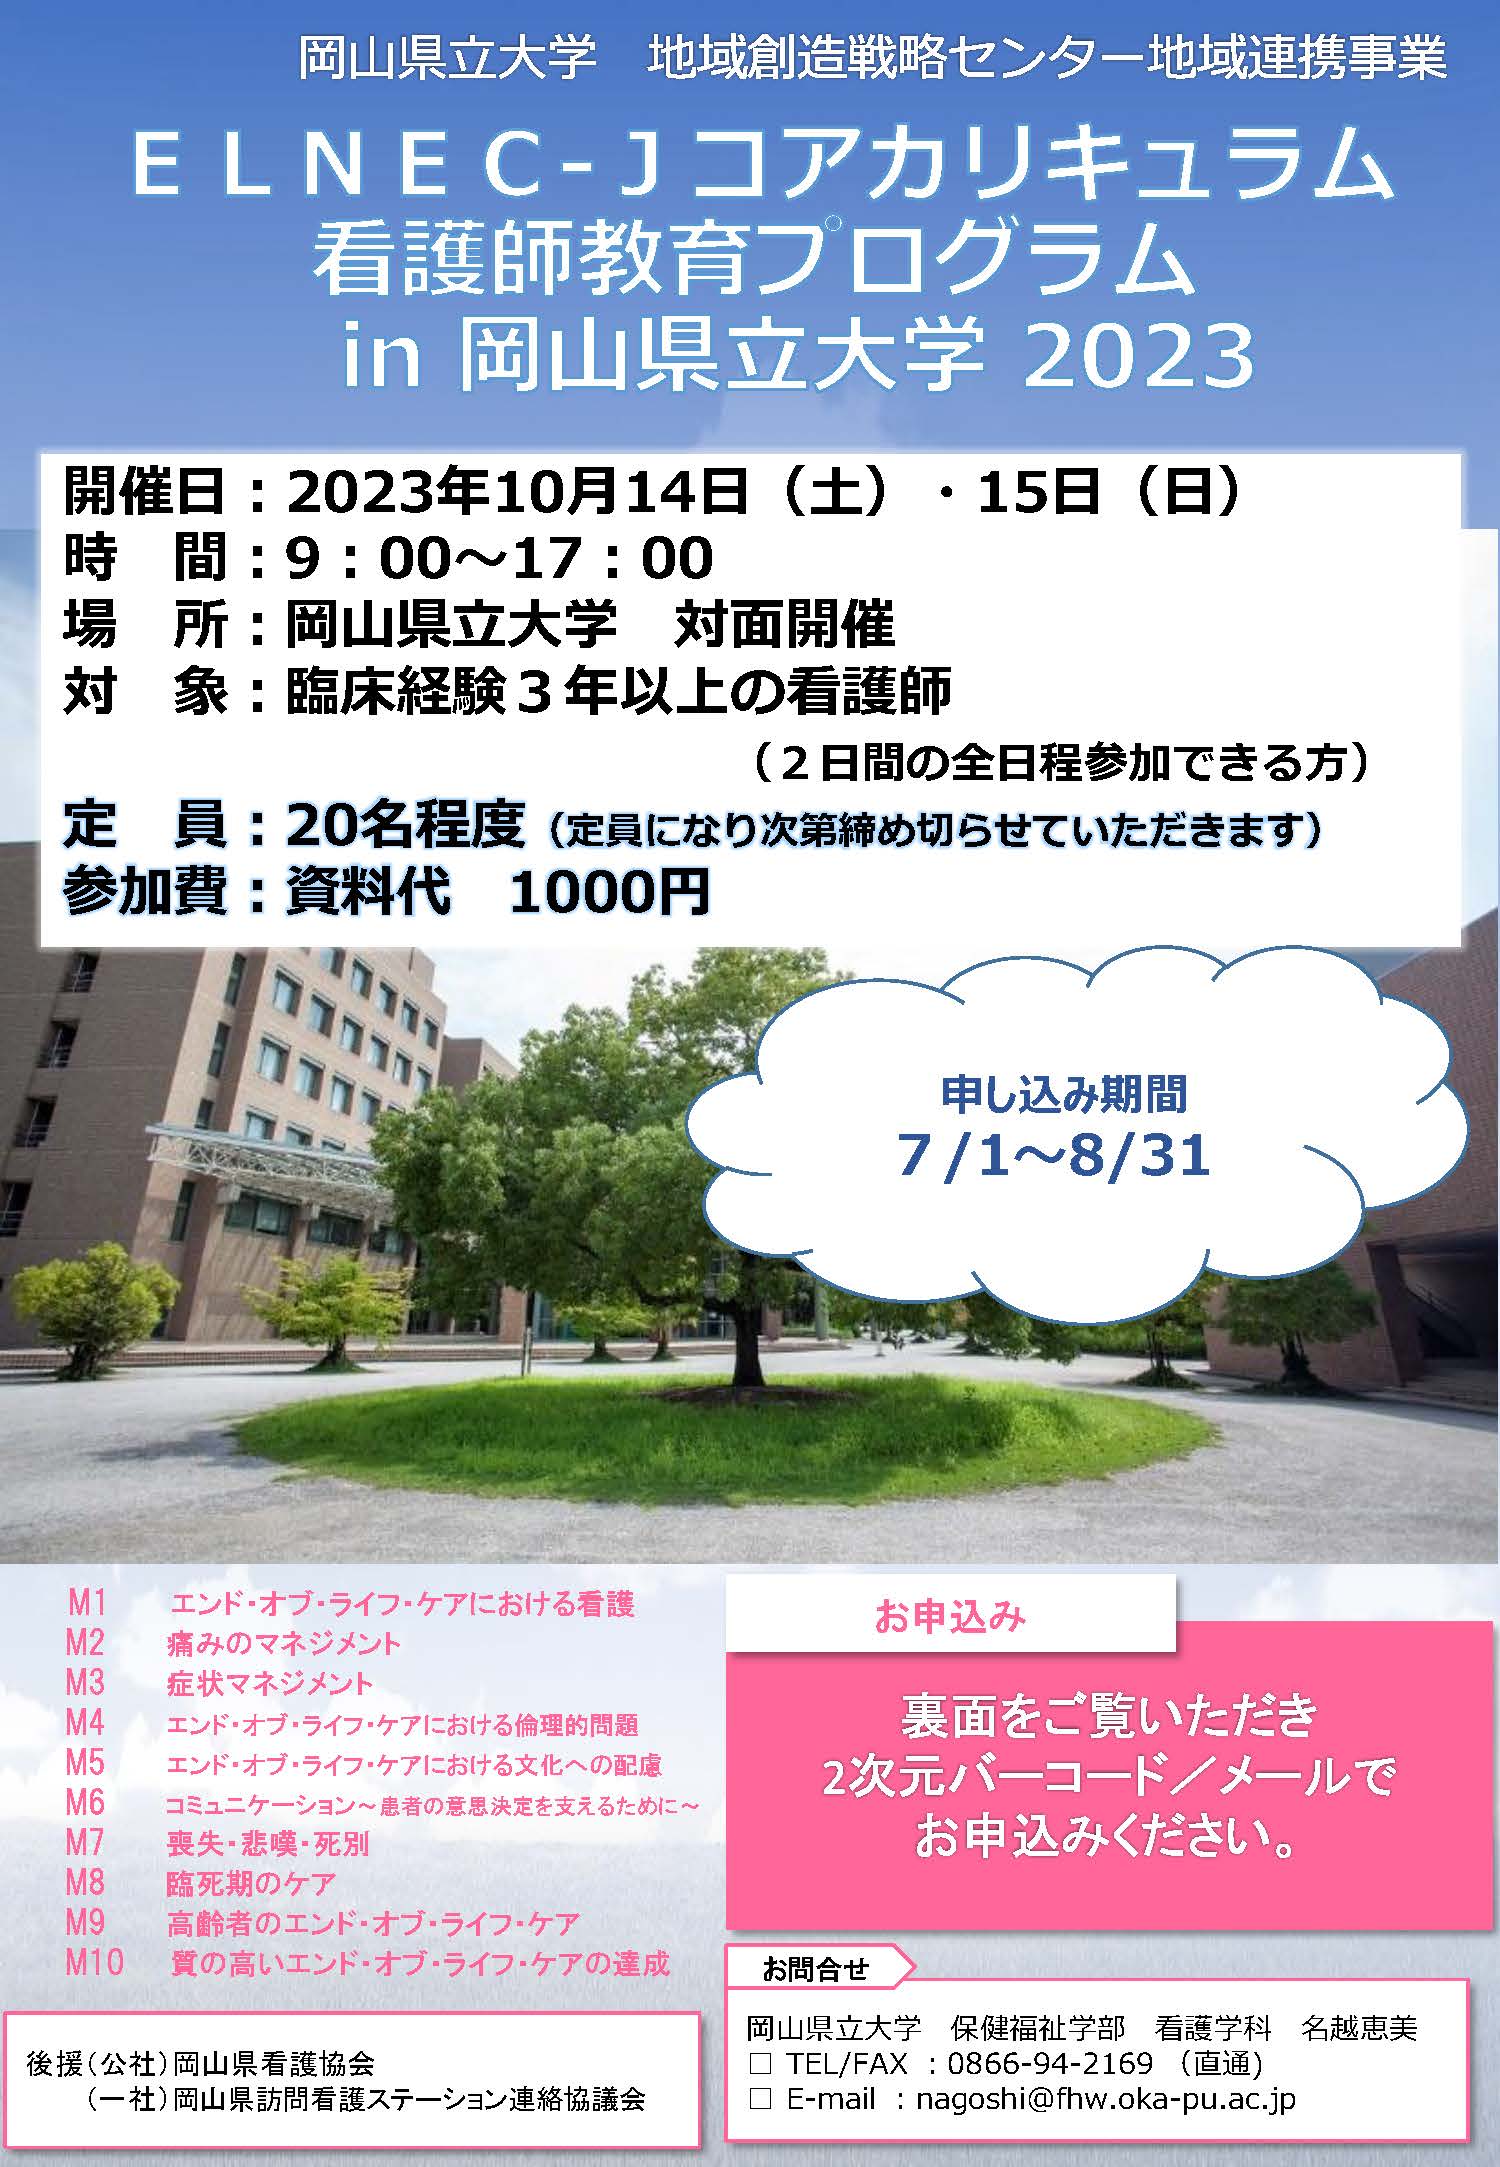 ELNEC-Jコアカリキュラム看護師教育プログラム in 岡山県立大学2023 の開催について